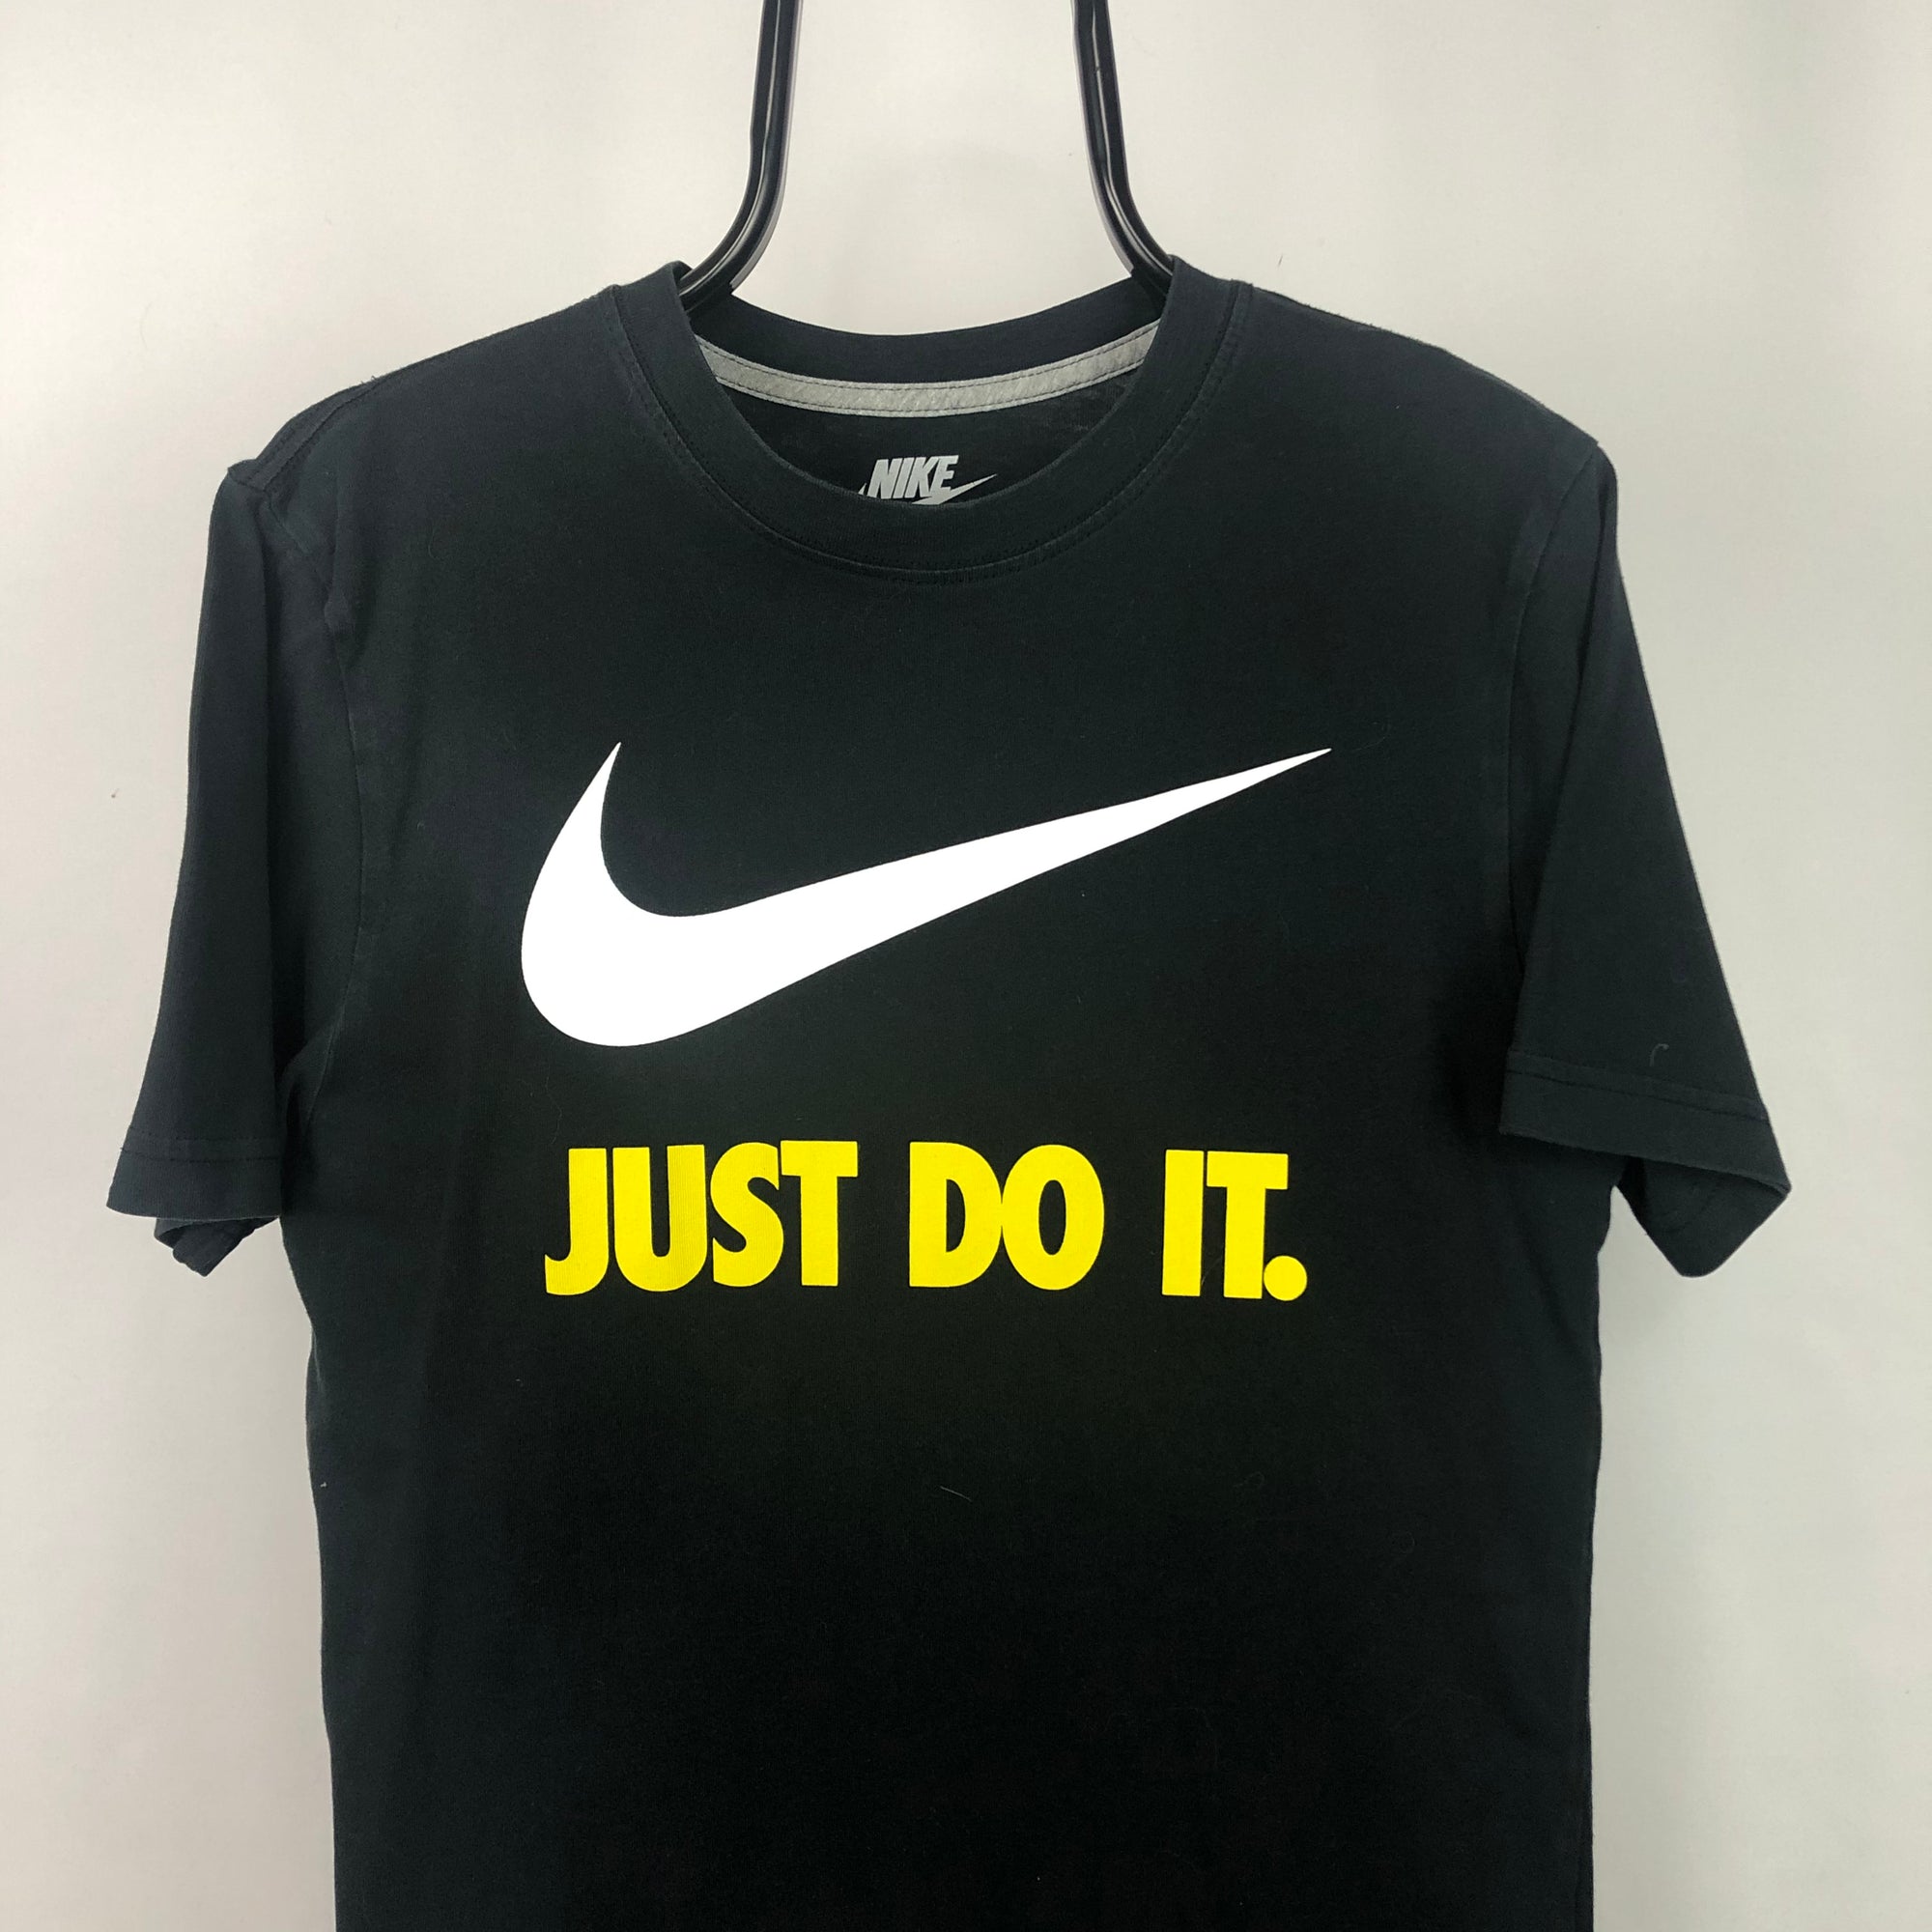 Nike Just Do It Tee in Black - Men's Medium/Women's Large